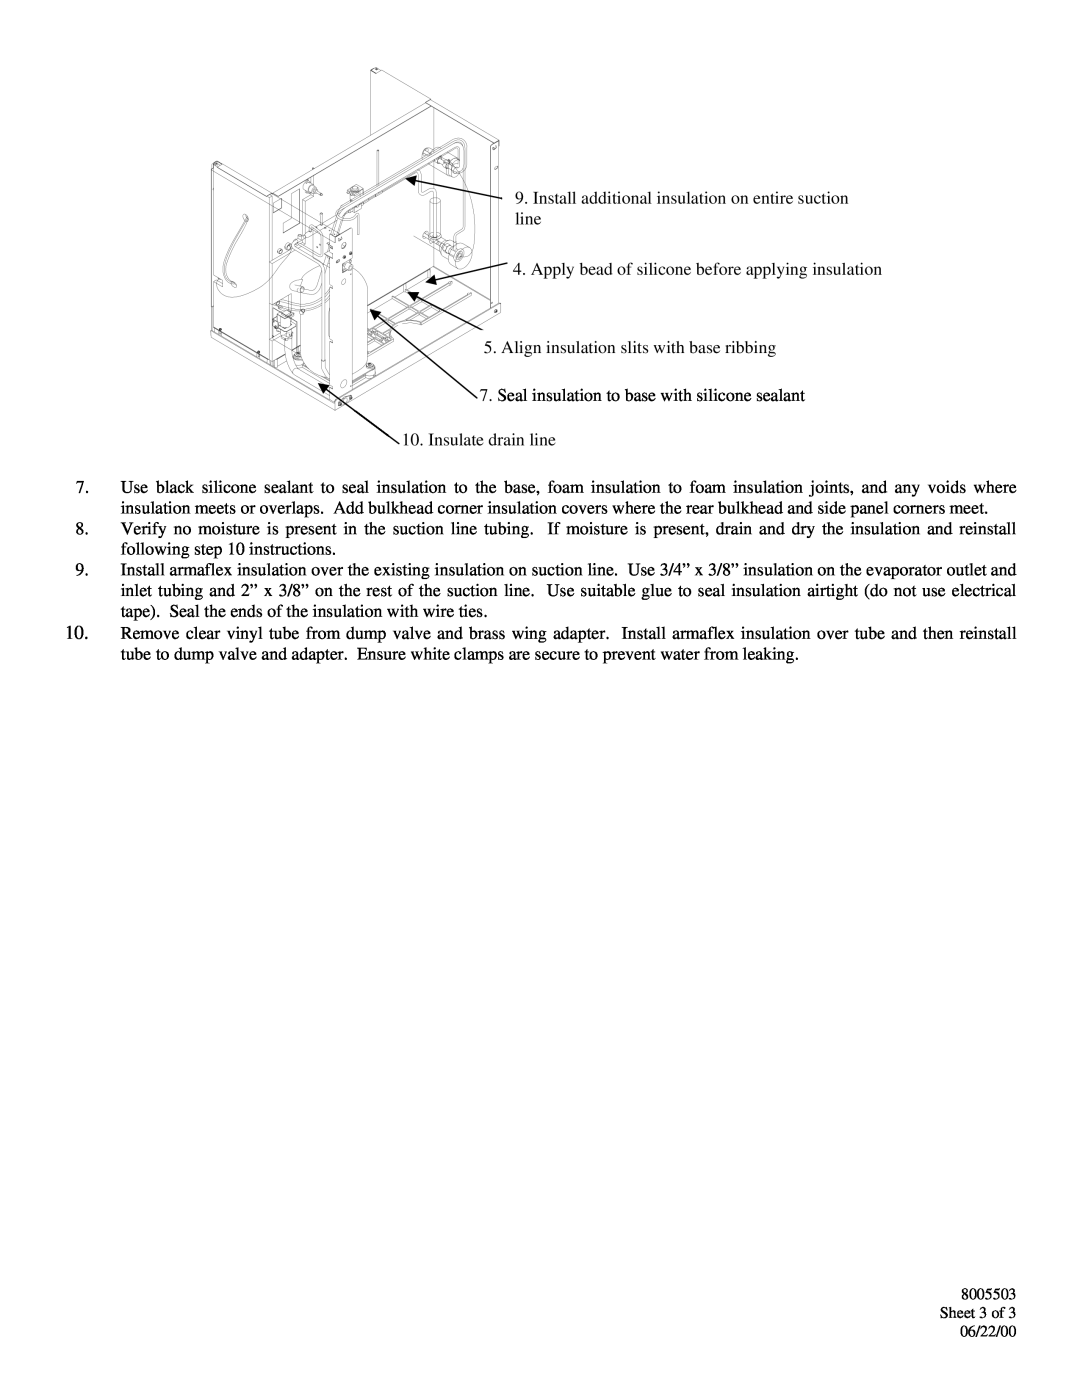 Manitowoc Ice Q-0320, Q-0420 installation instructions Align insulation slits with base ribbing 